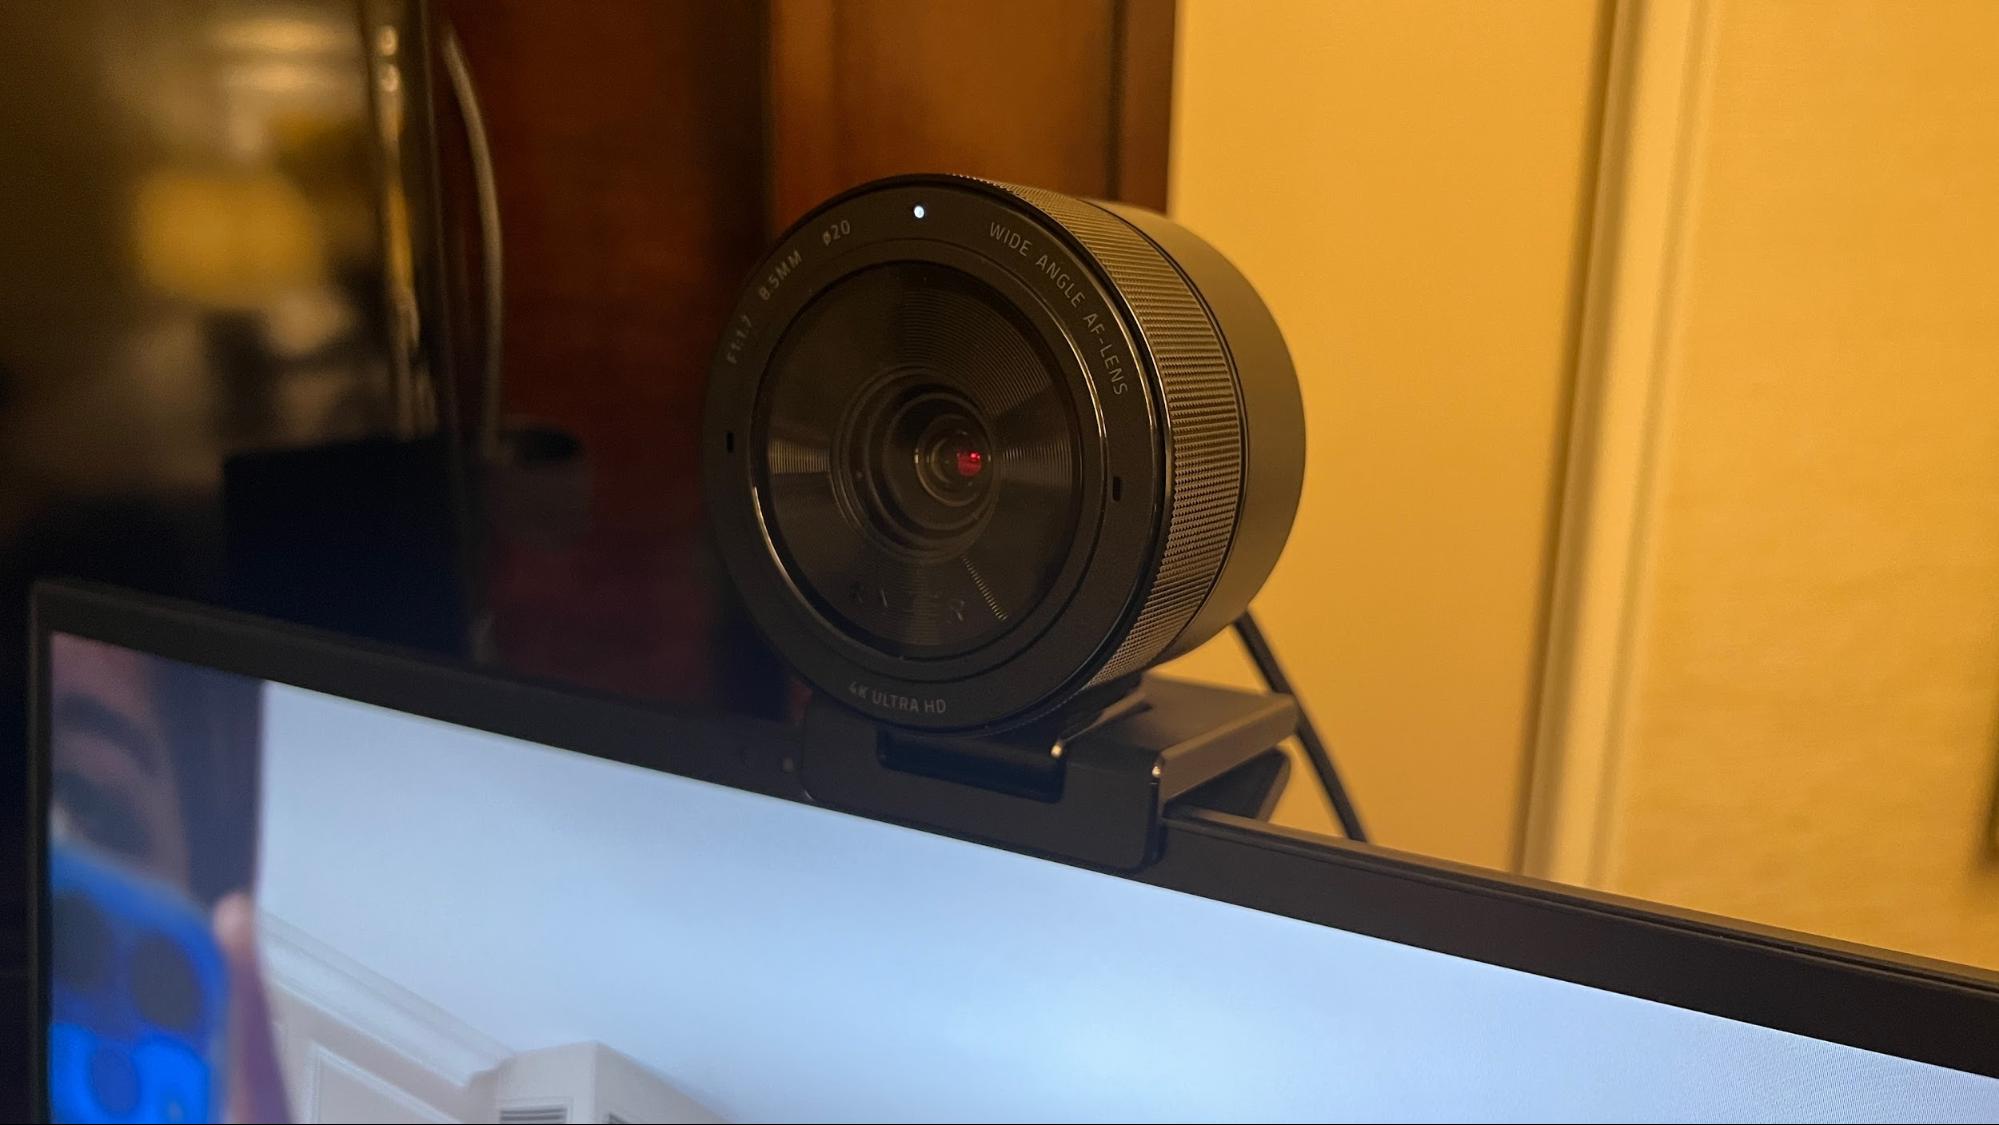 Razer Kiyo Pro Ultra has the Biggest Sensor Ever Put in a Webcam